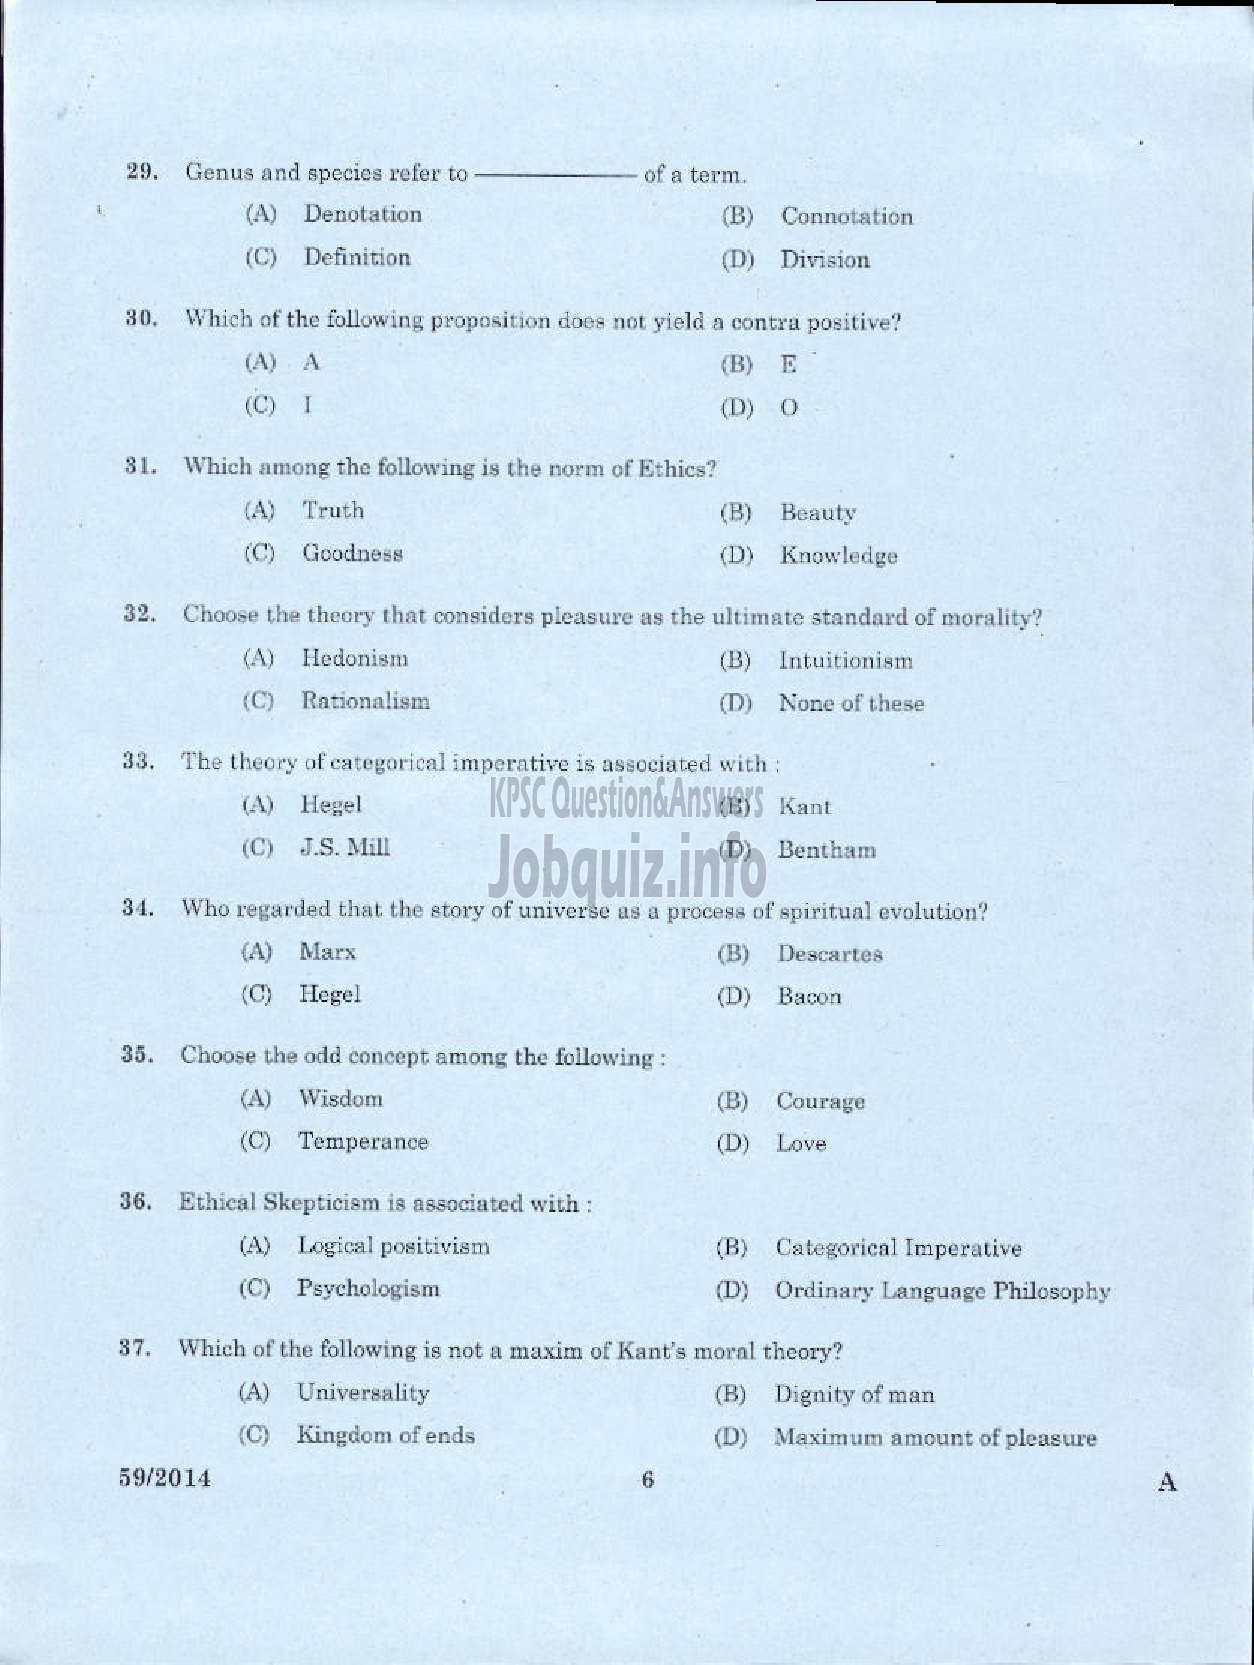 Kerala PSC Question Paper - LECTURER IN PHILOSOPHY KERALA COLLEGIATE EDUCATION-4